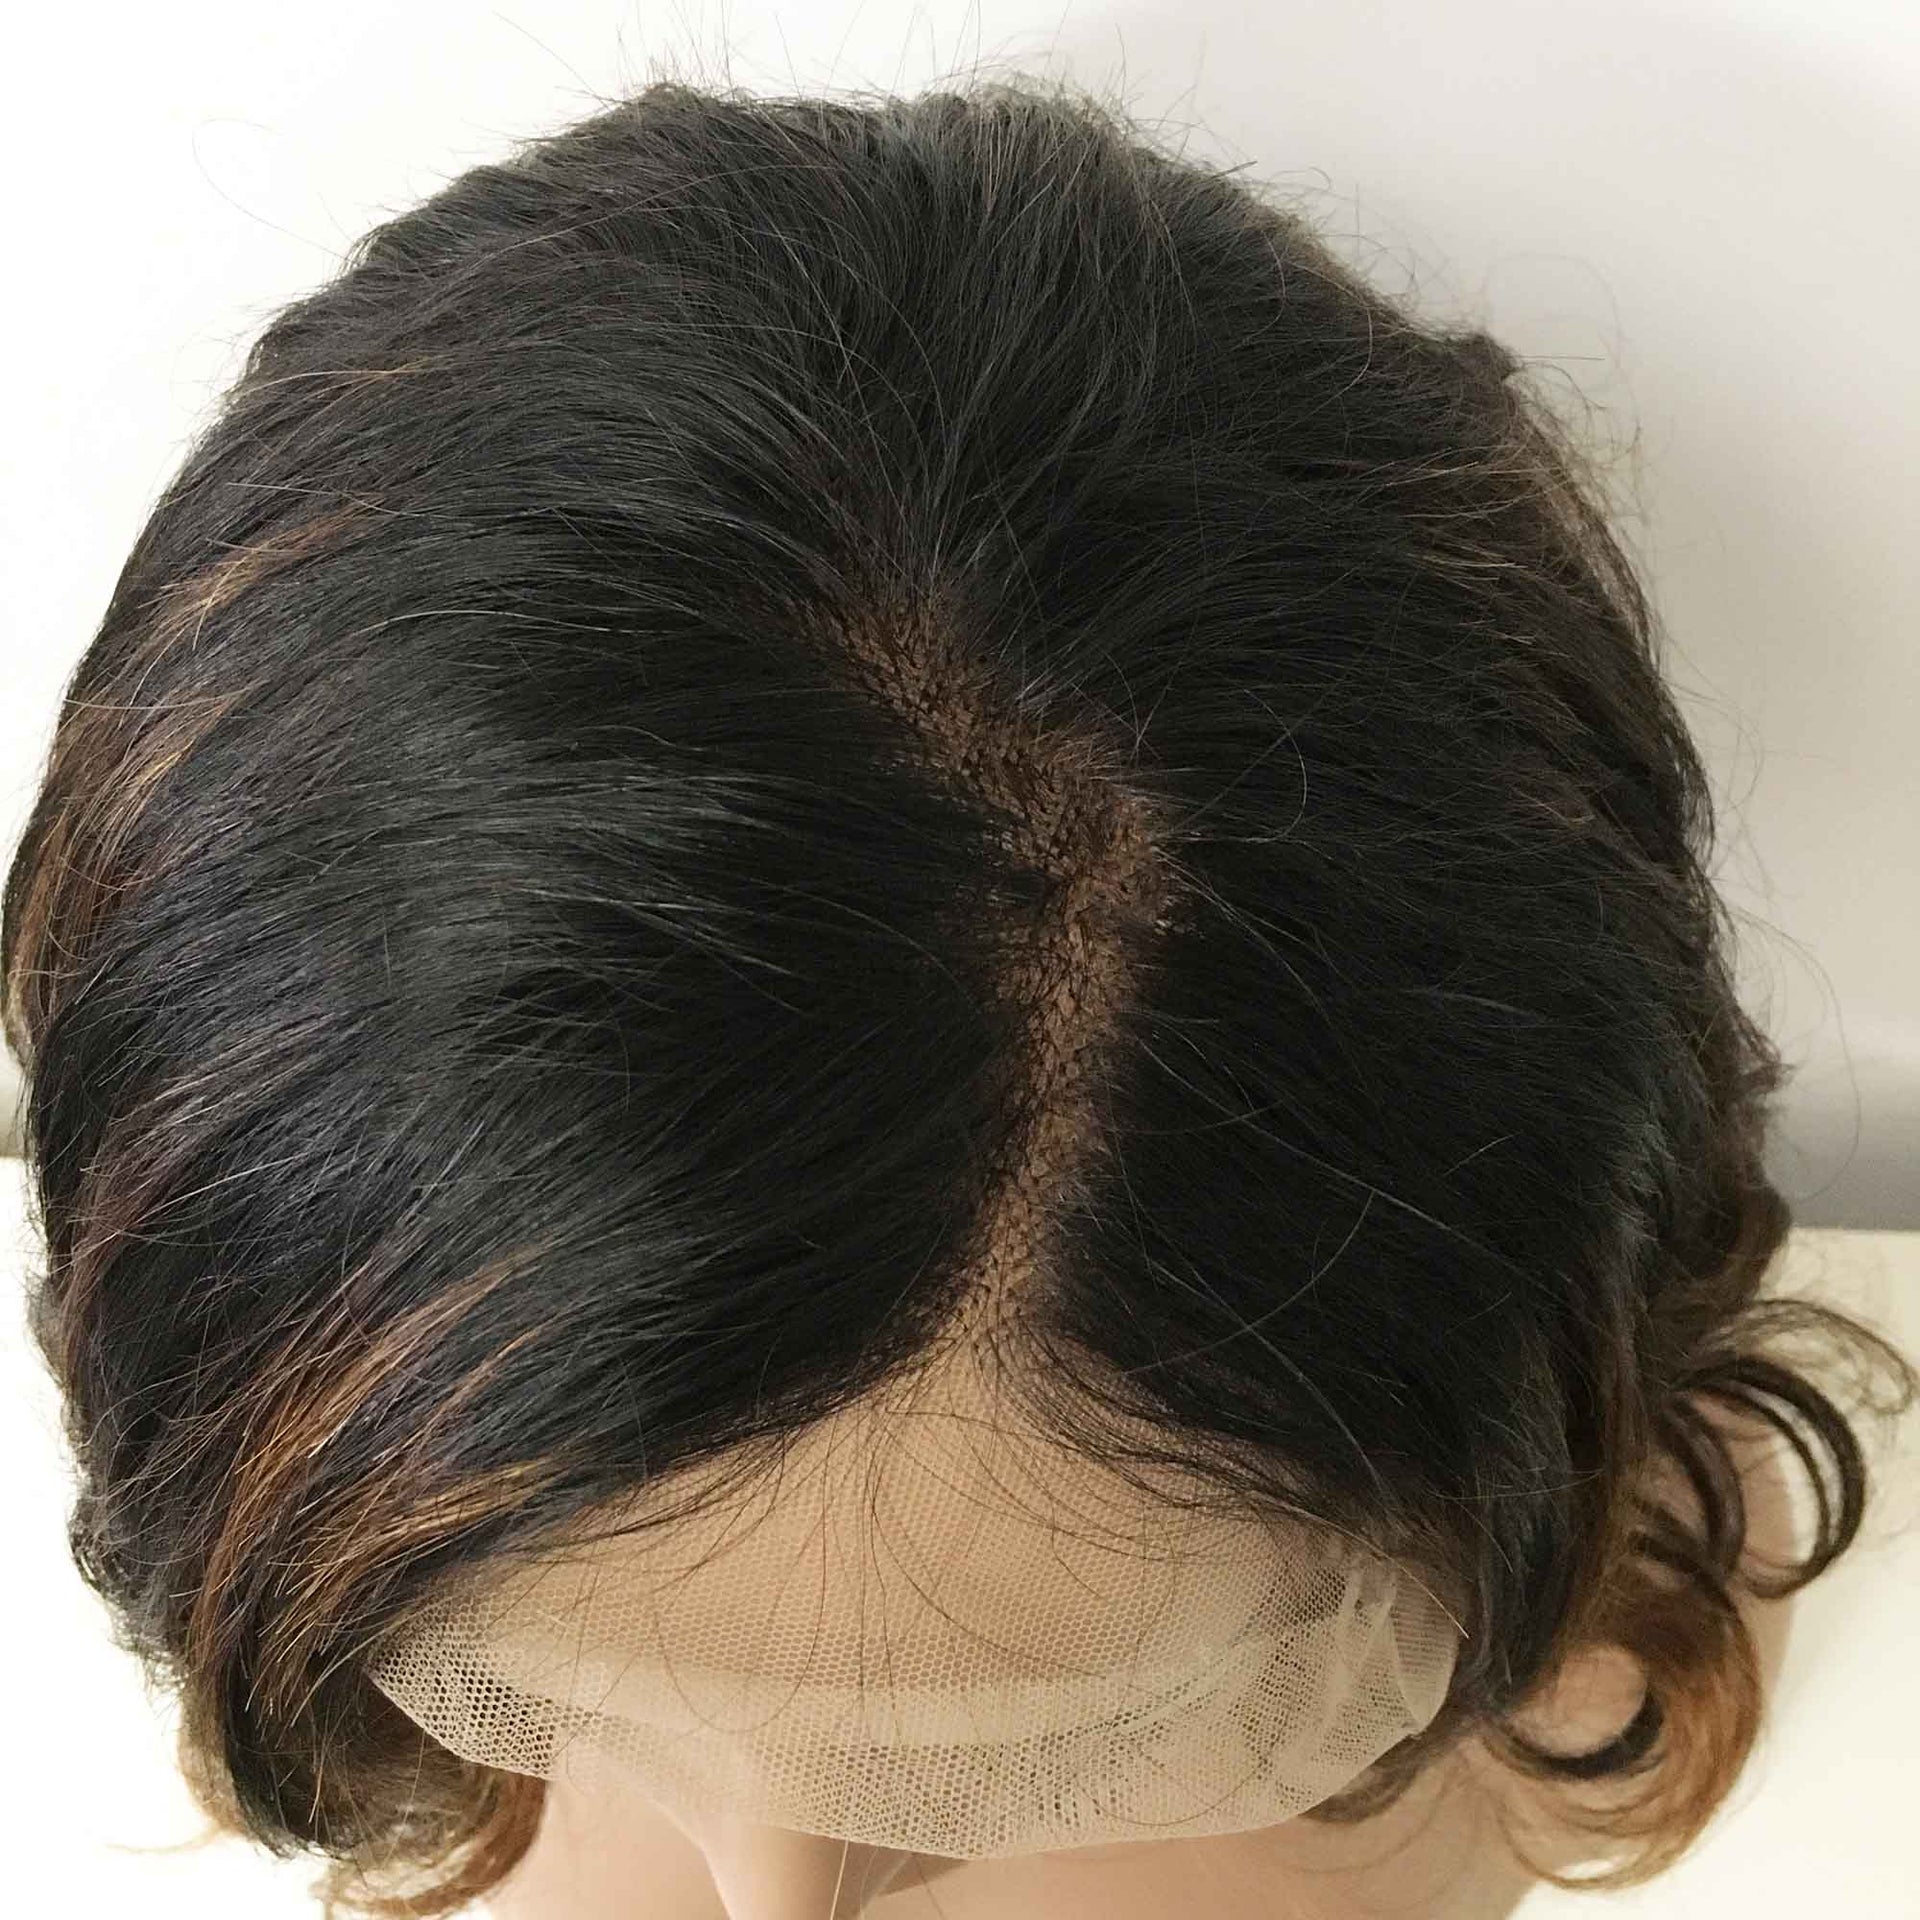 nevermindyrhead Women Black Bronze Highlight Real Human Hair 13X6 Lace Front Short Bob Side Part Wig